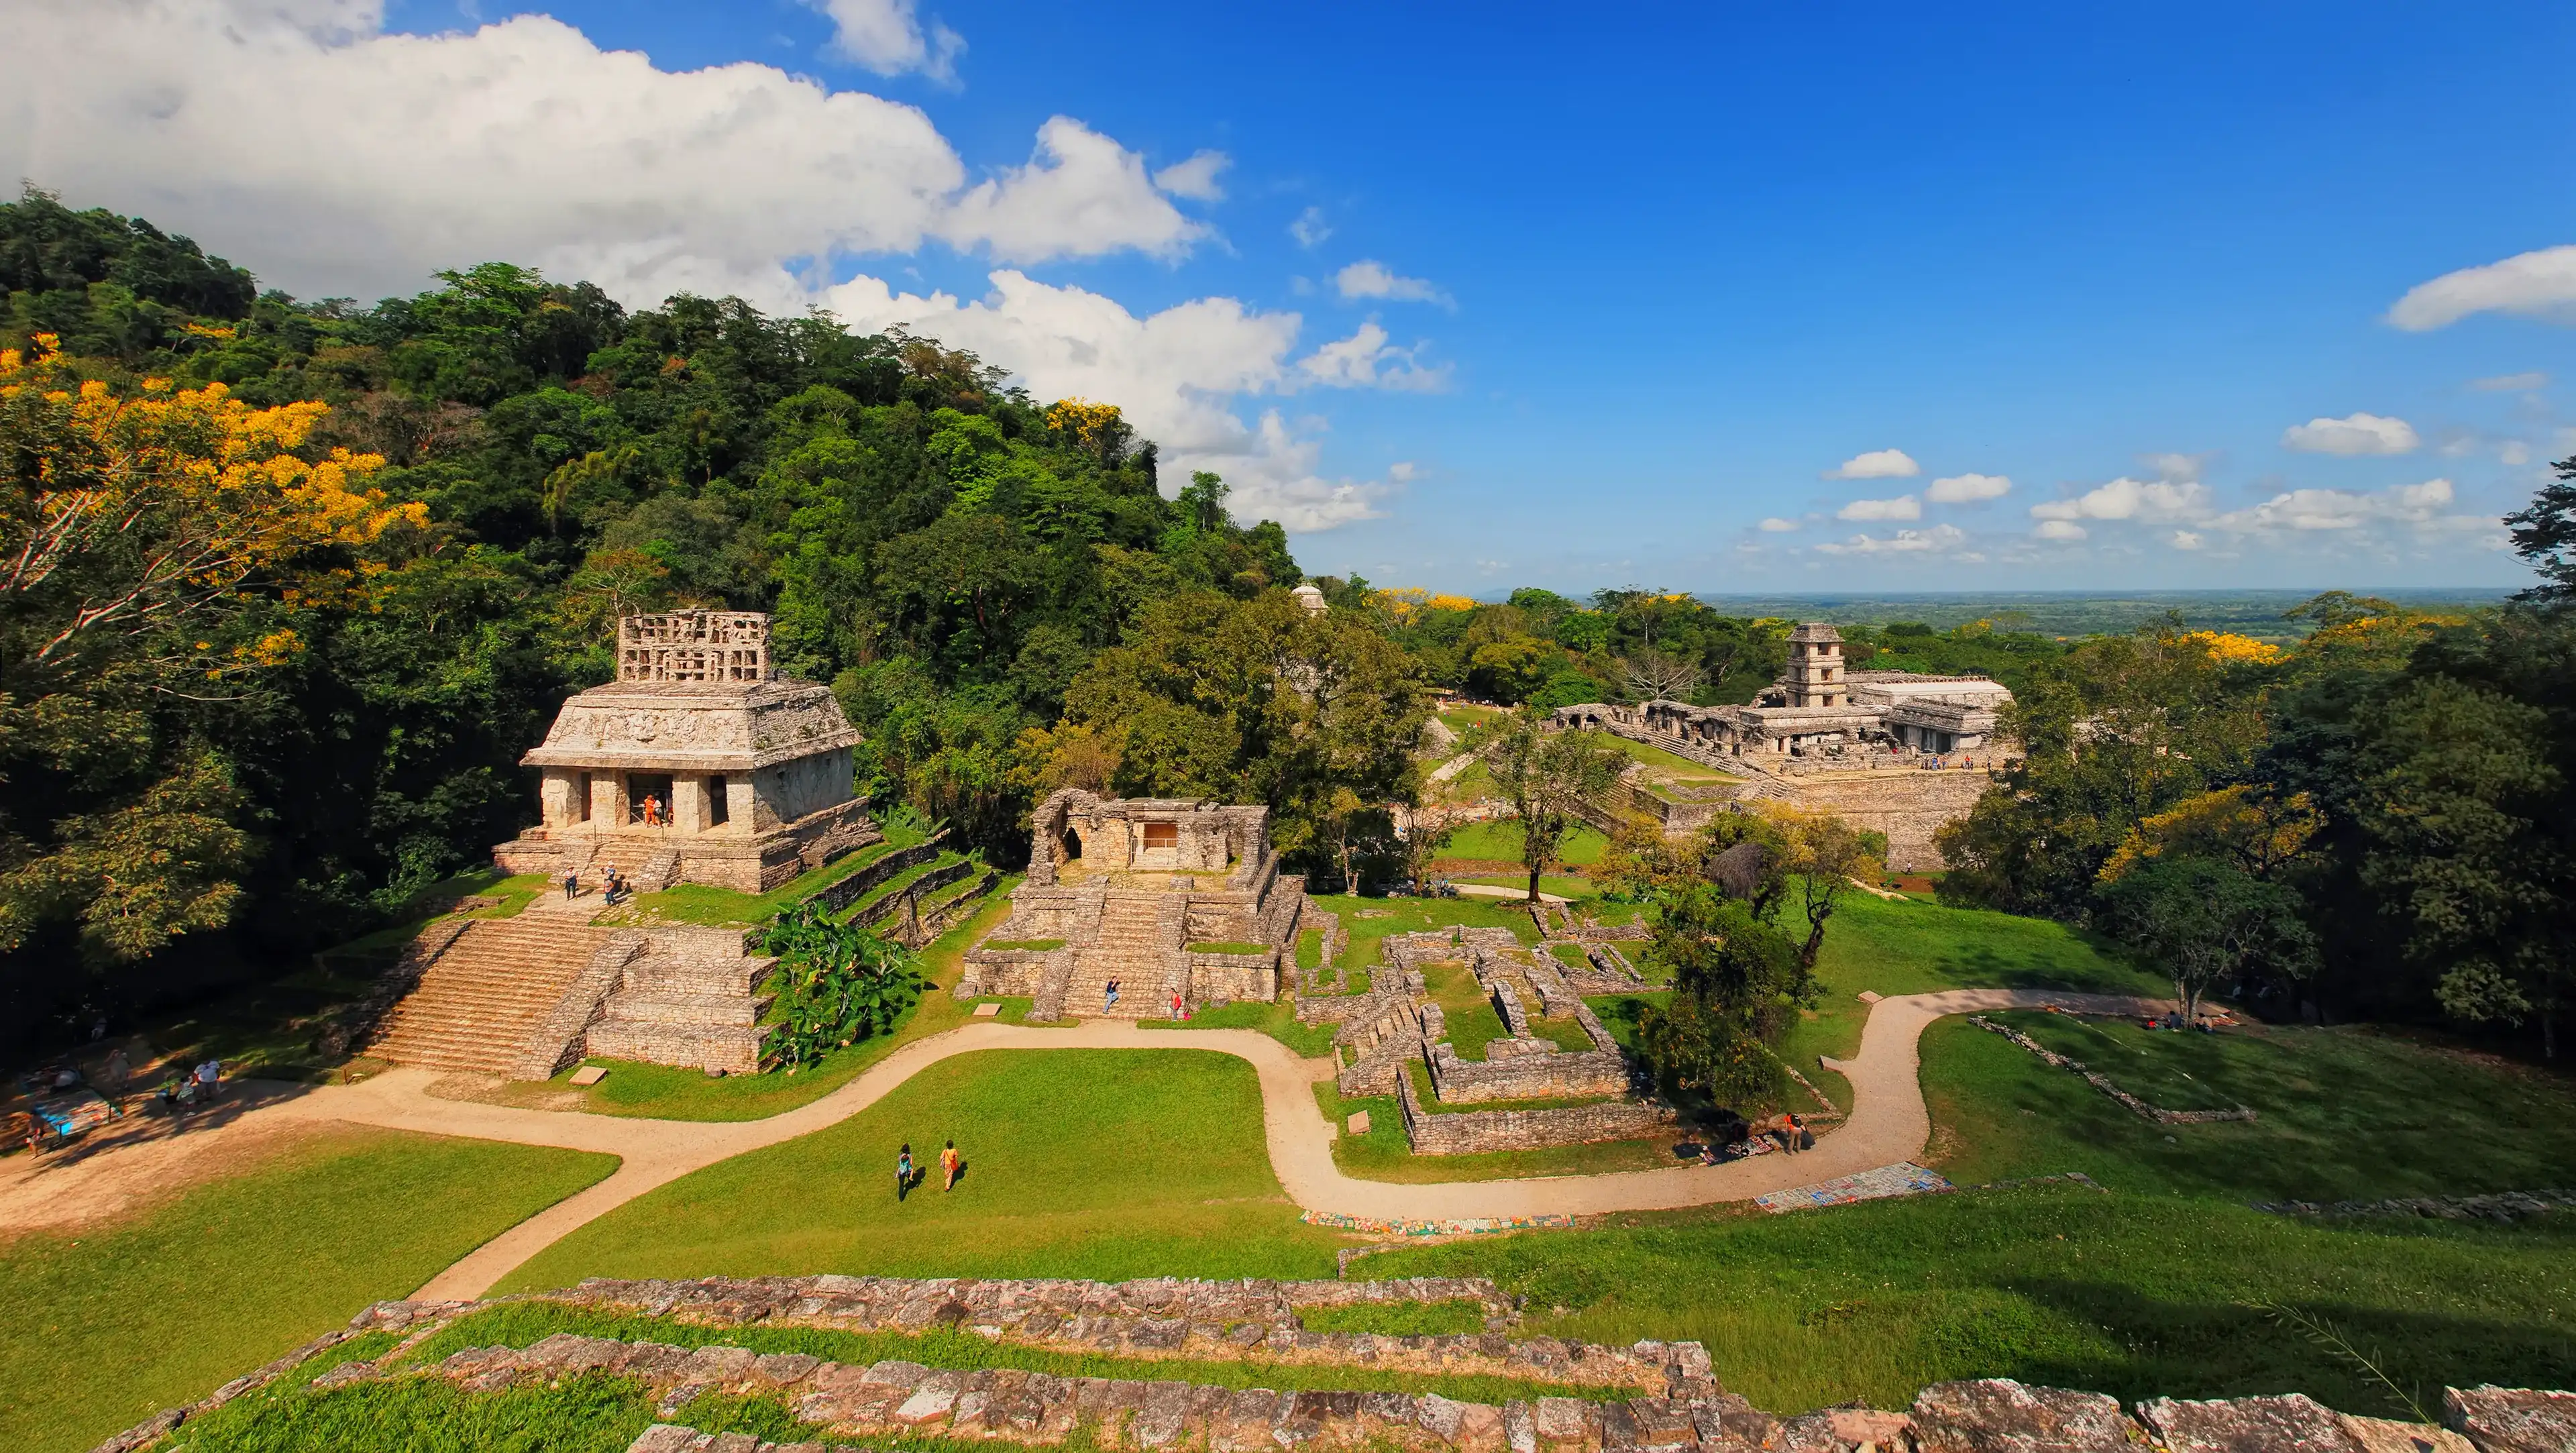 Best Palenque hotels. Cheap hotels in Palenque, Chiapas, Mexico